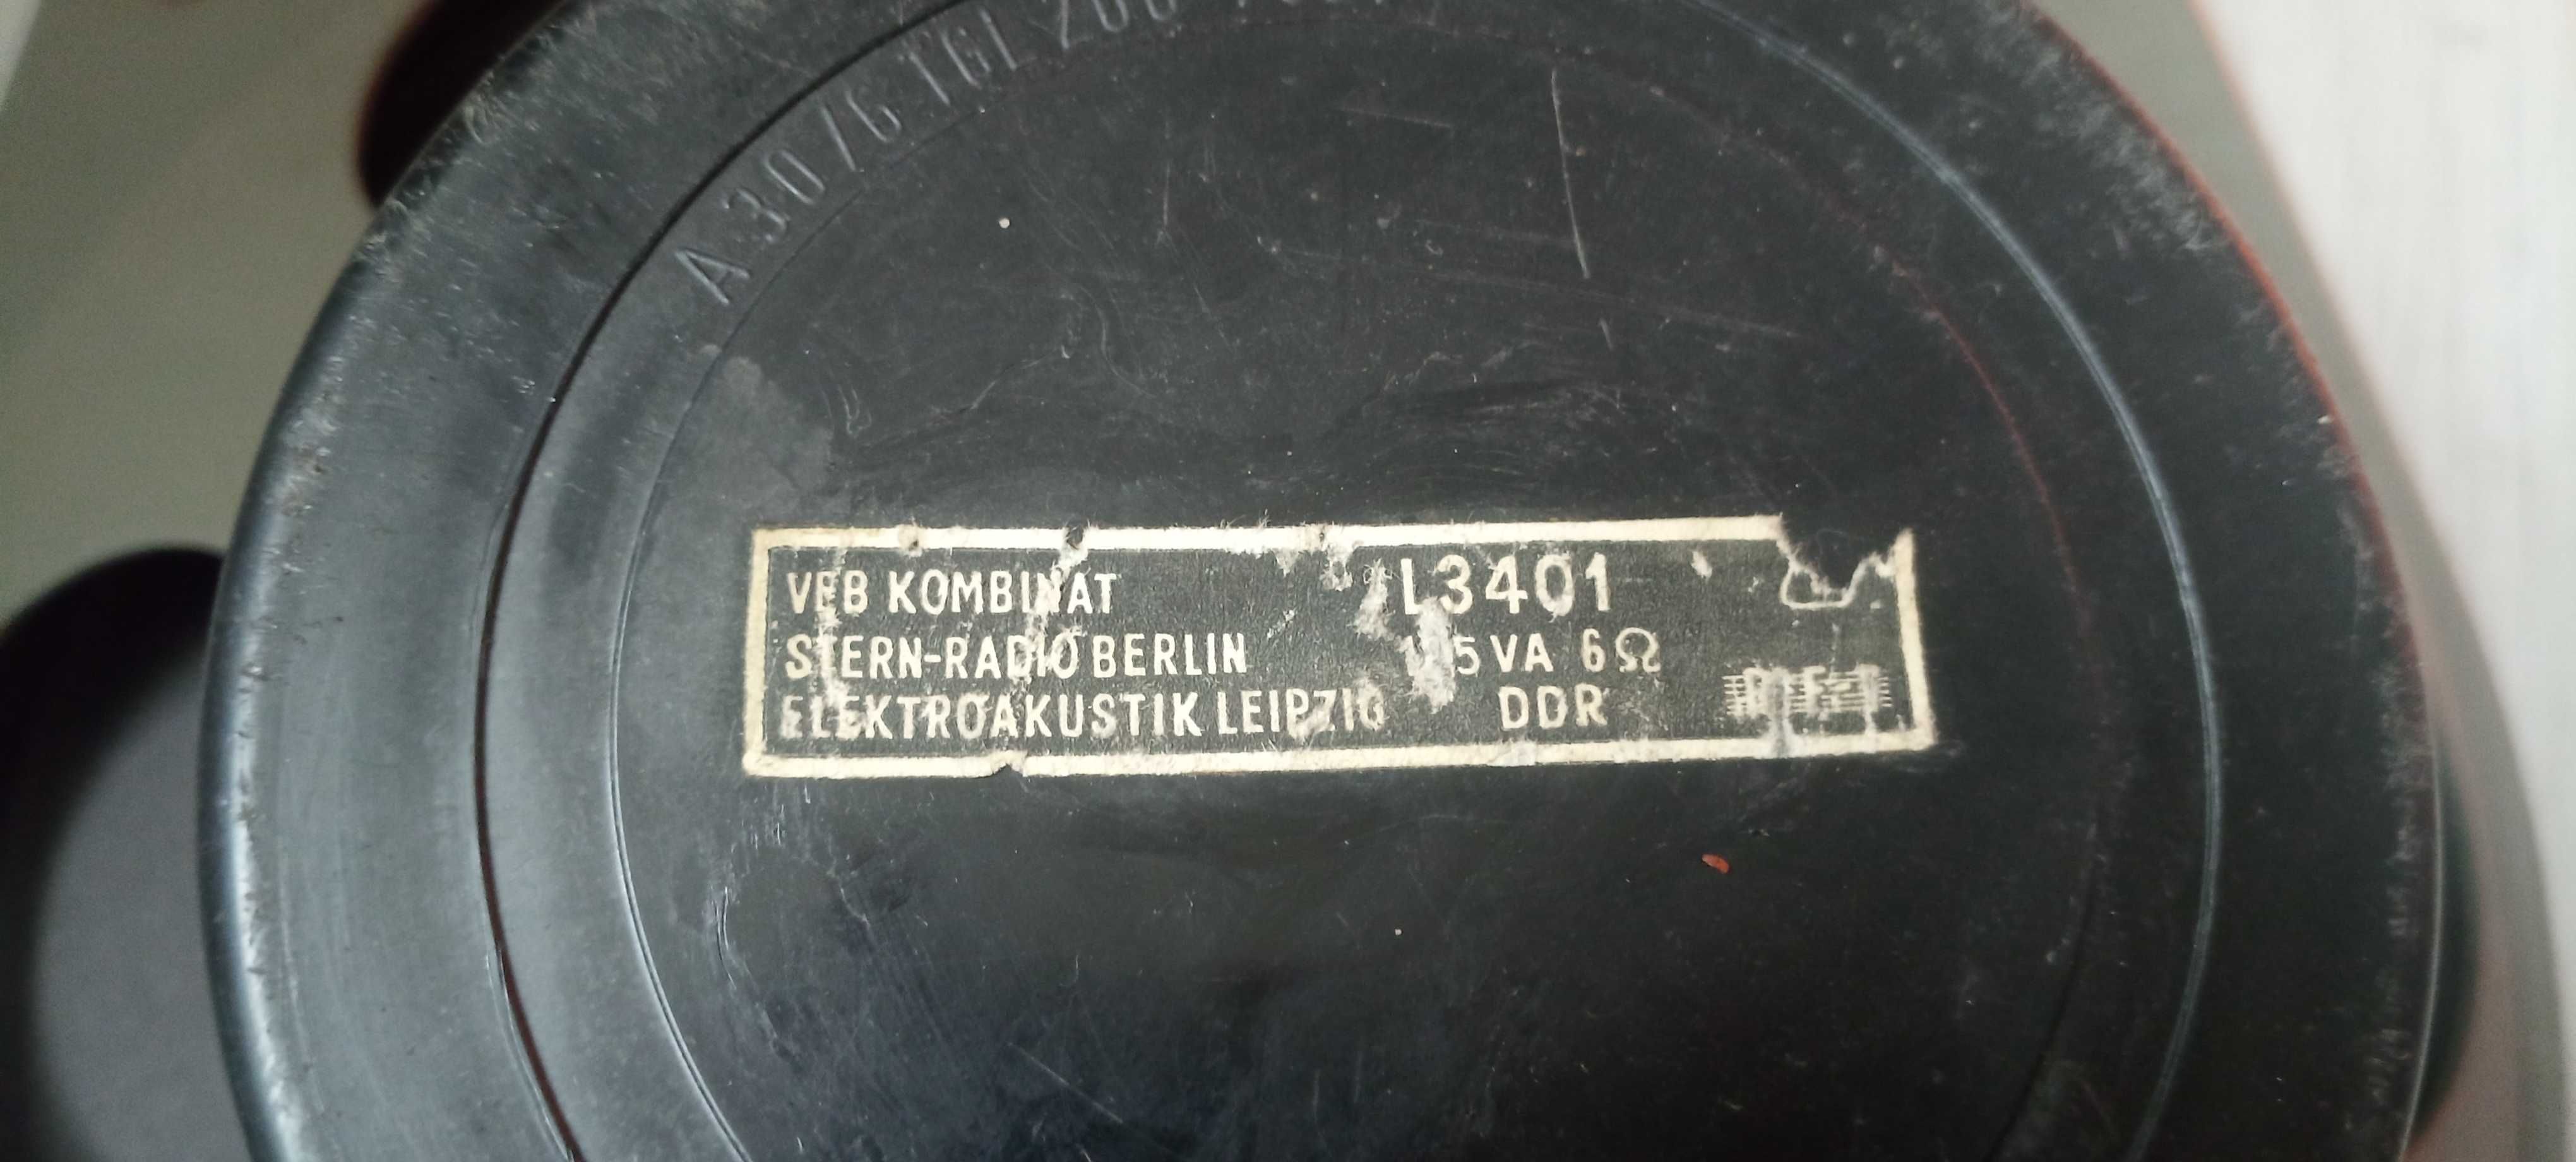 głośnik vintage RFT L3401  średnica 30 cm 2 szt.